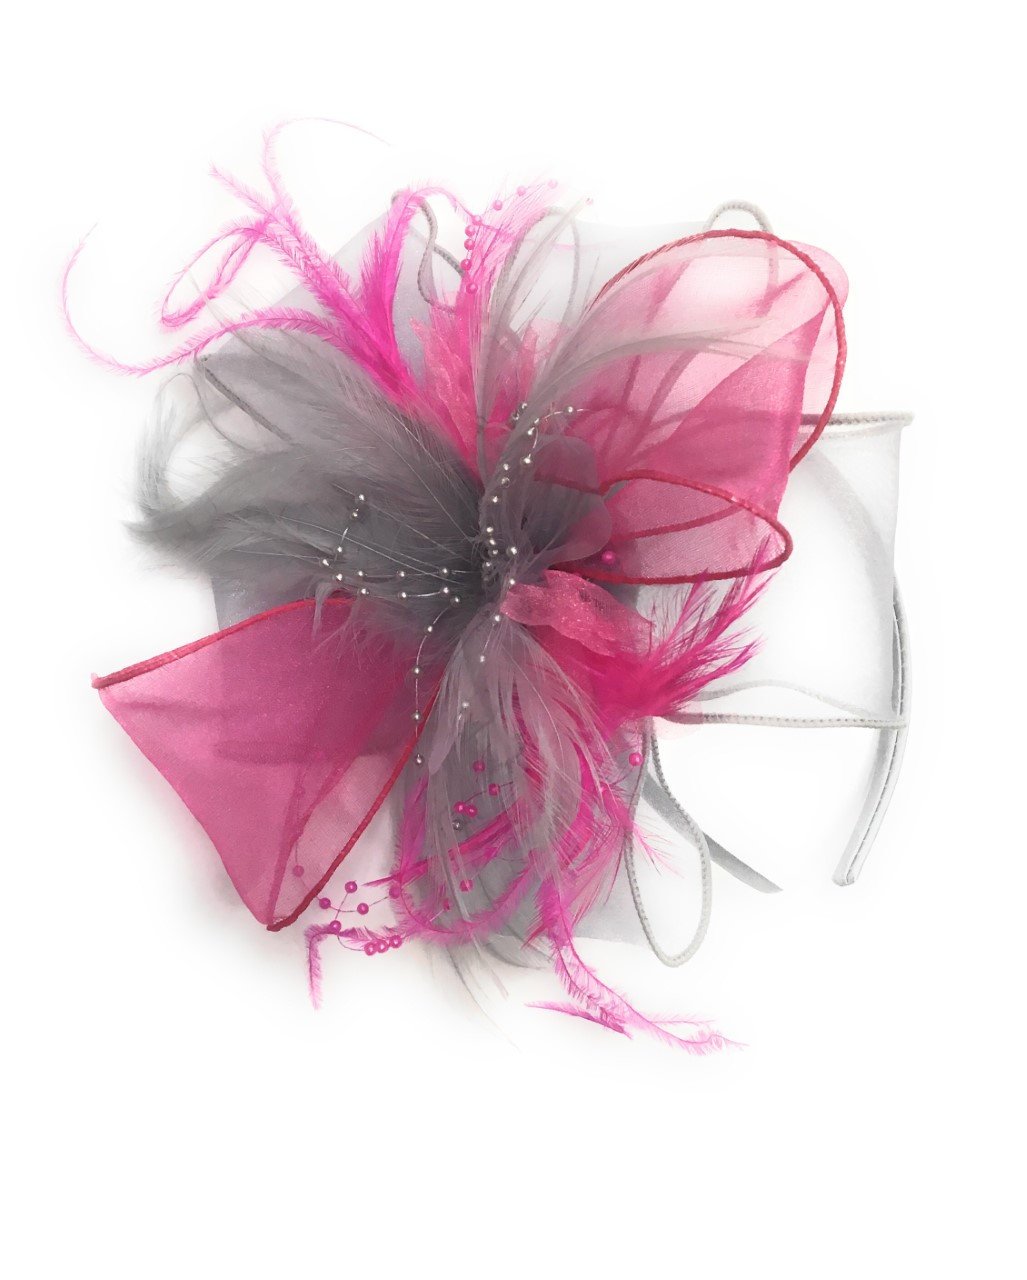 Caprilite Silver Grey and Fuchsia Pink Chiffon Feathers Fascinator Headband Ascot Wedding